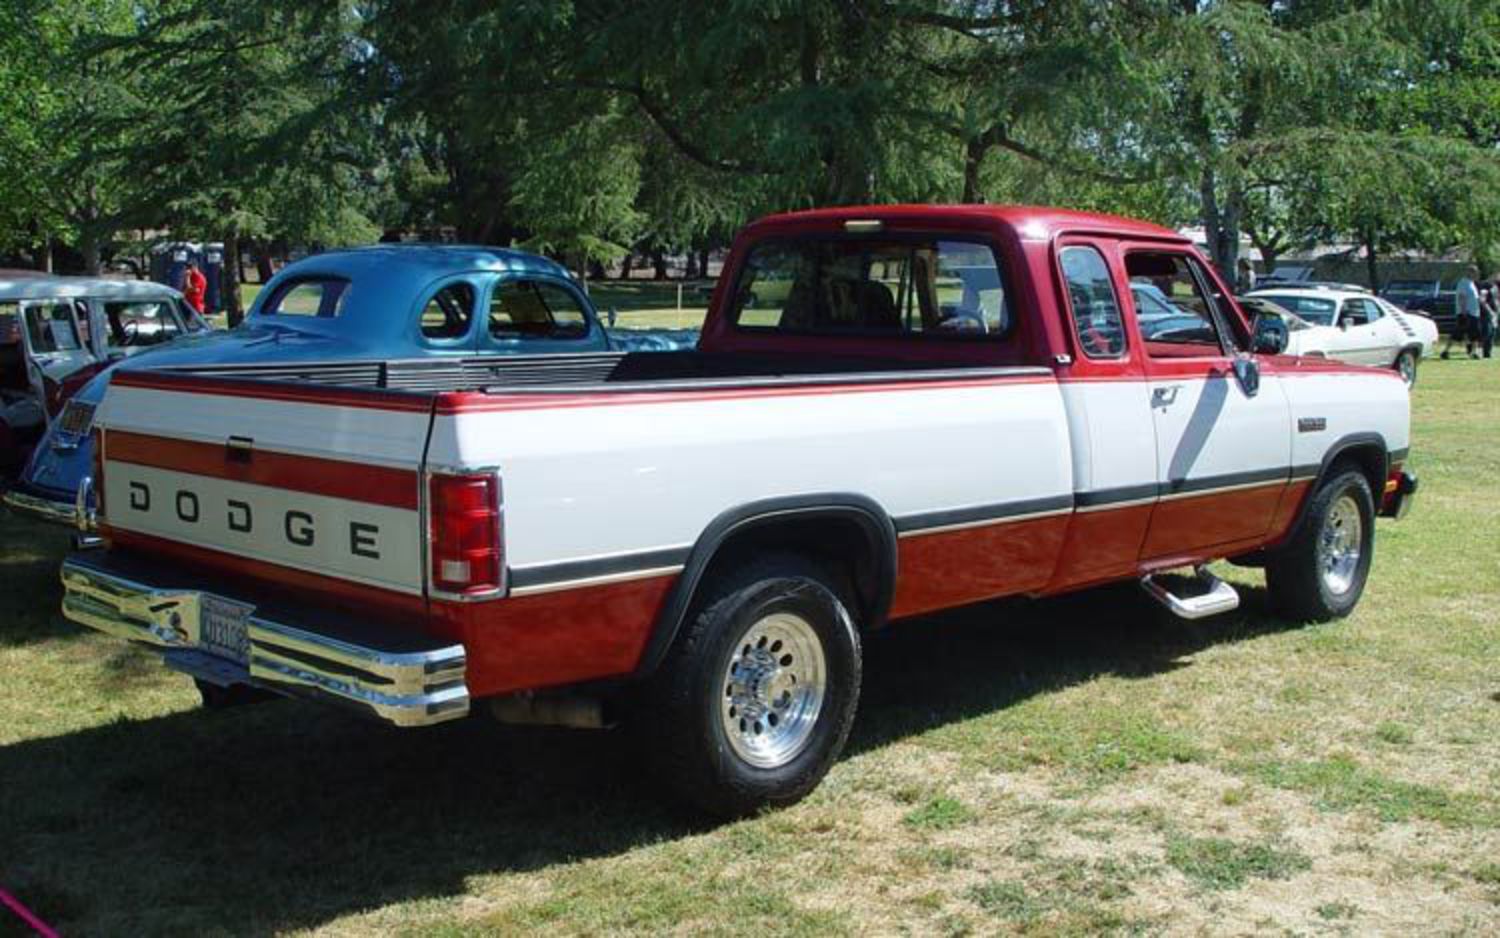 1993 Dodge Ram 250 Rear View